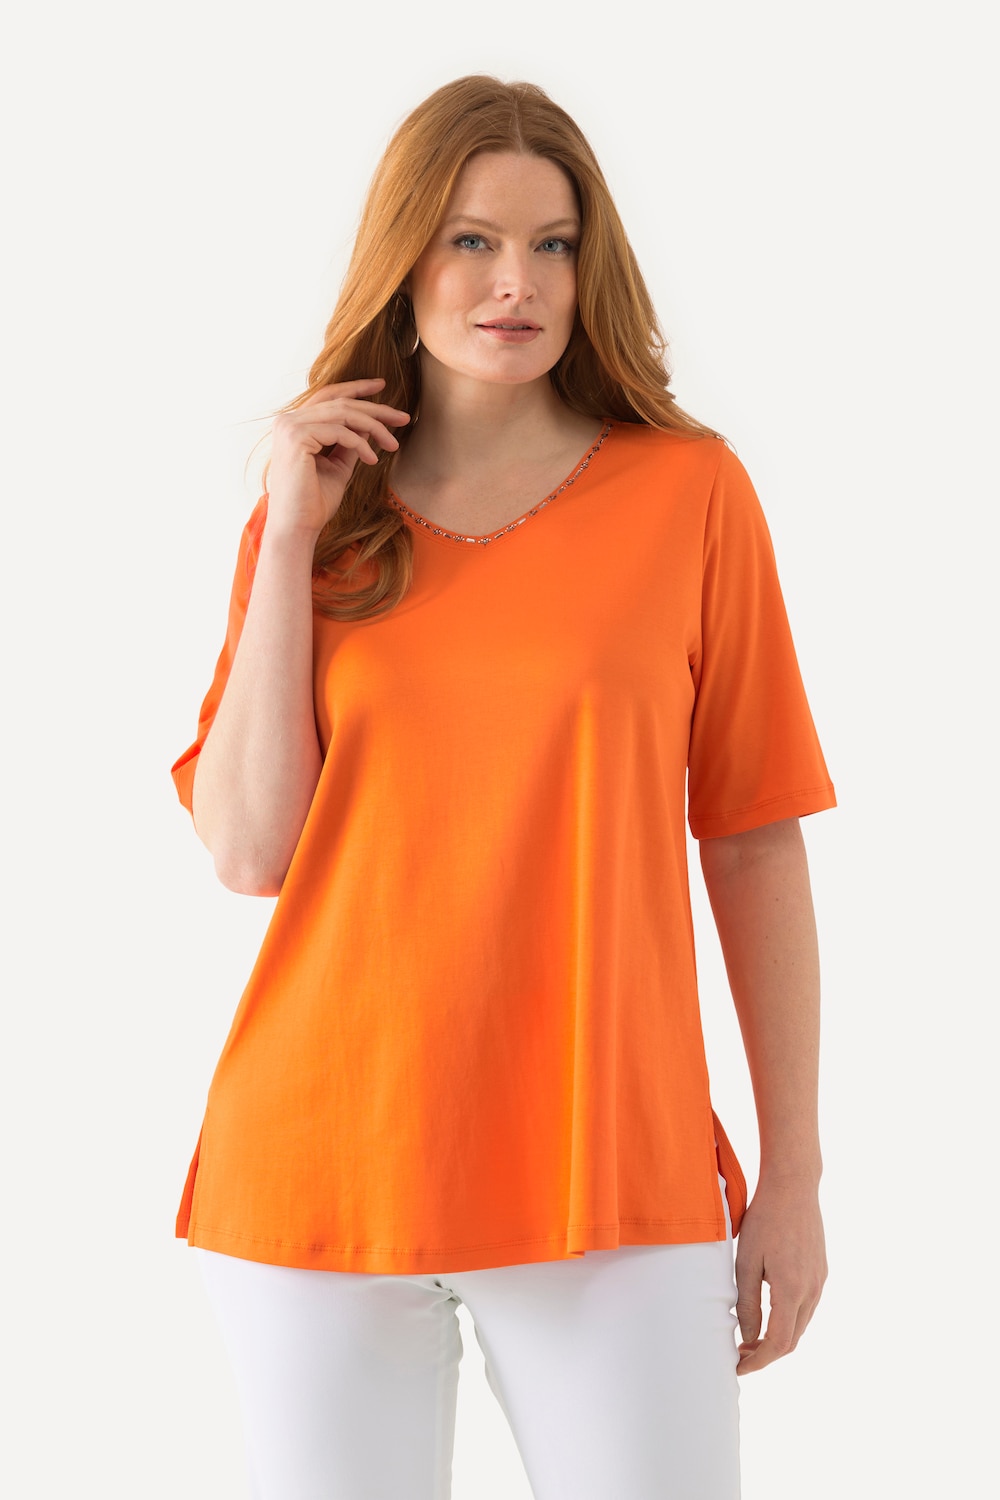 Grote Maten T-shirt, Dames, oranje, Maat: 50/52, Katoen, Ulla Popken